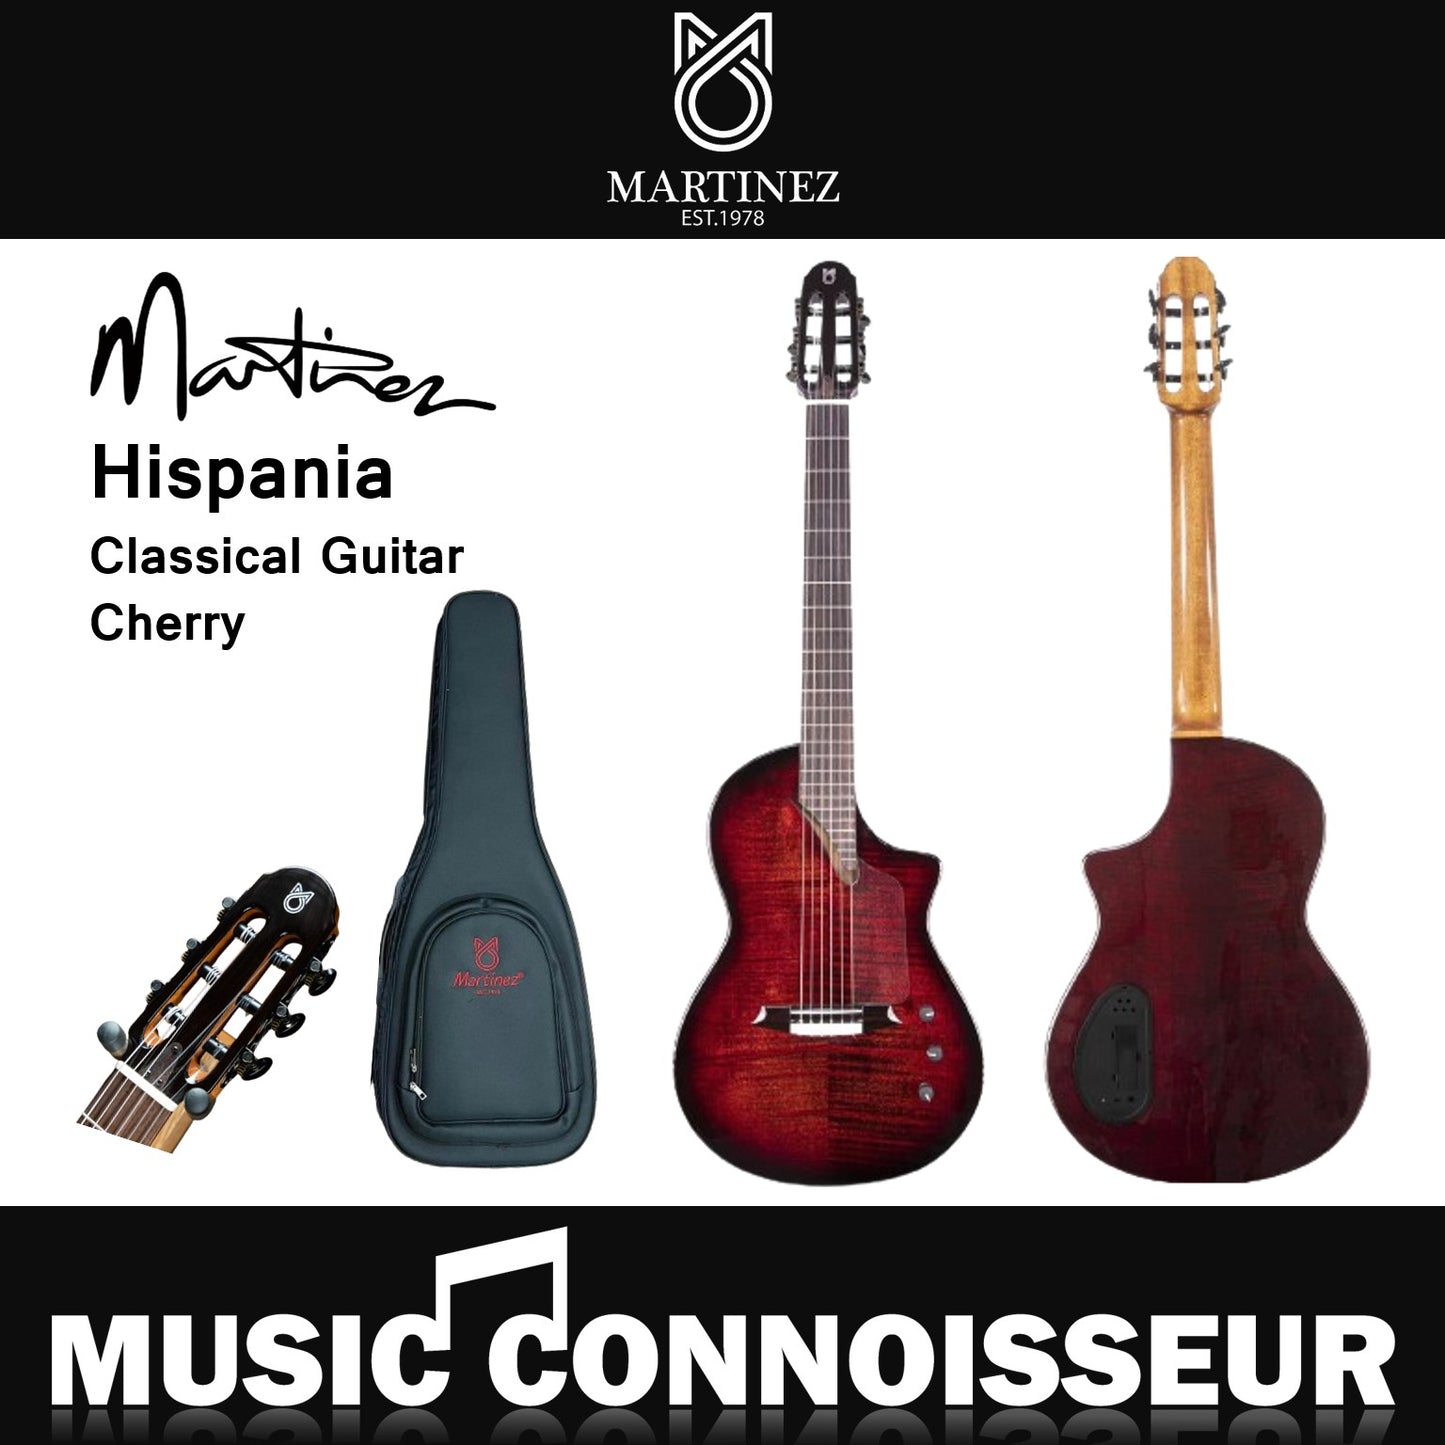 Martinez Hispania Classical Guitar Cherry